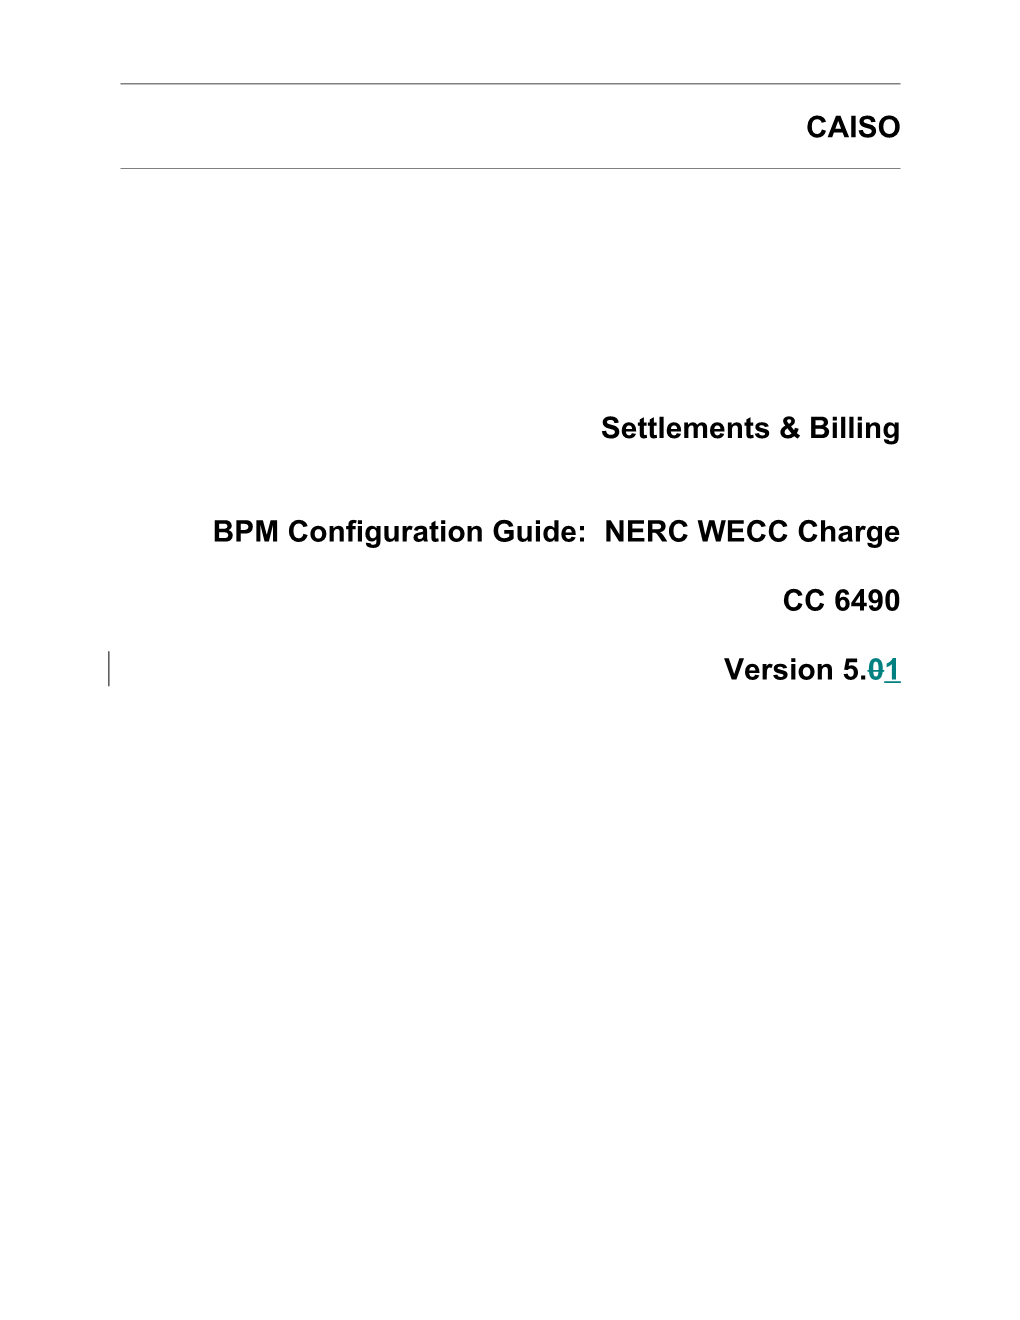 BPM - CG CC 6490 NERC WECC Charge